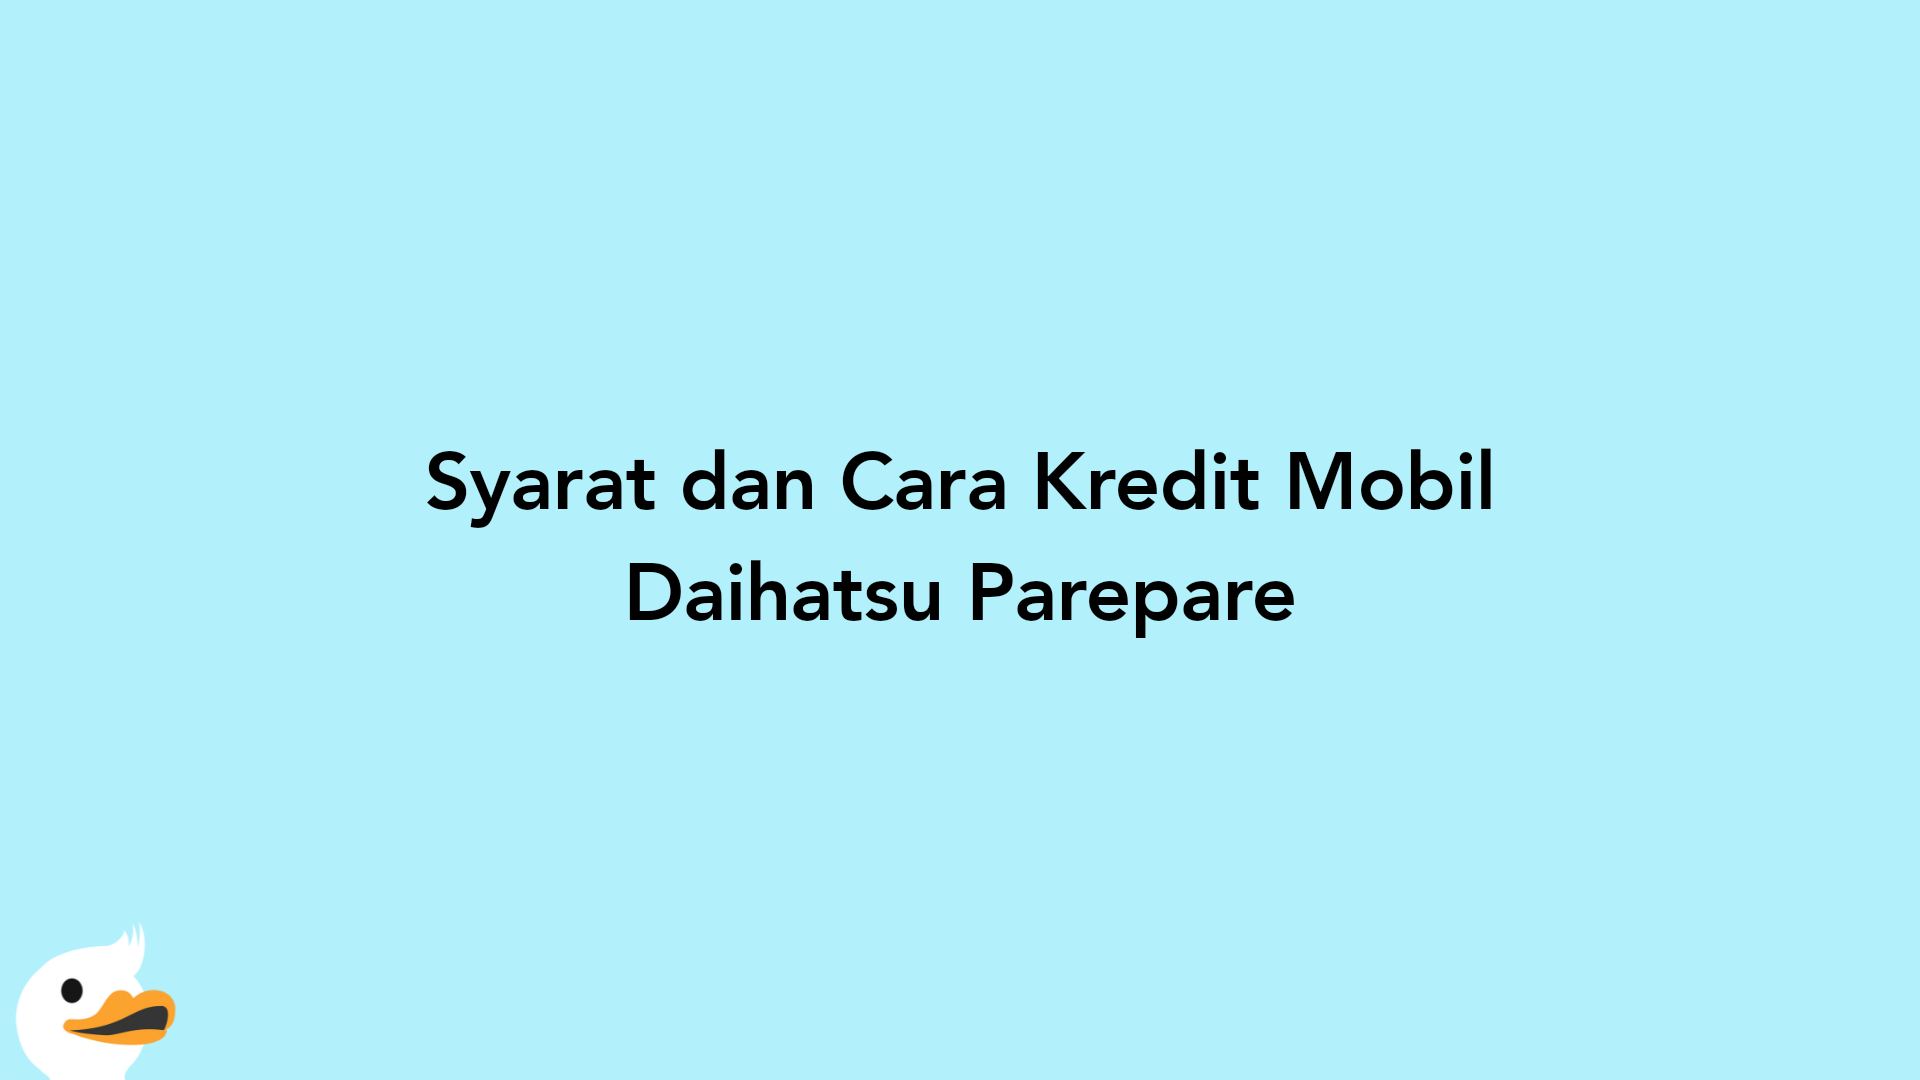 Syarat dan Cara Kredit Mobil Daihatsu Parepare